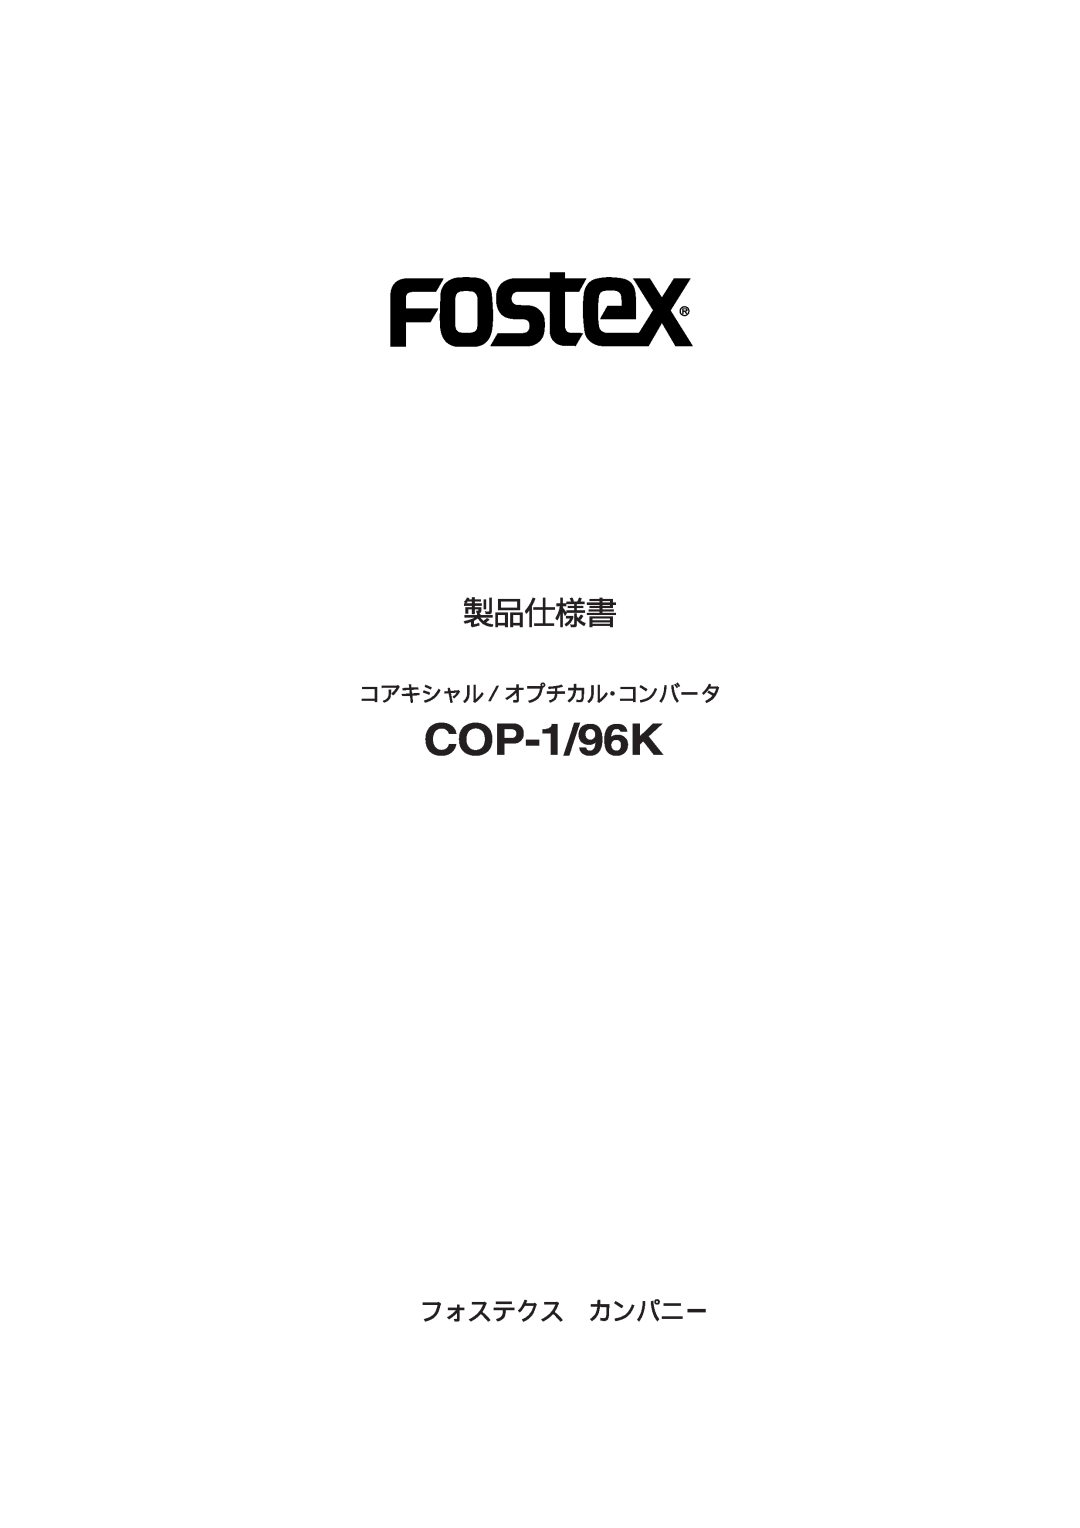 Fostex COP-1/96k owner manual Declaration of EC Directive, Model, Owners Manual, Coaxial/Optical Converter 